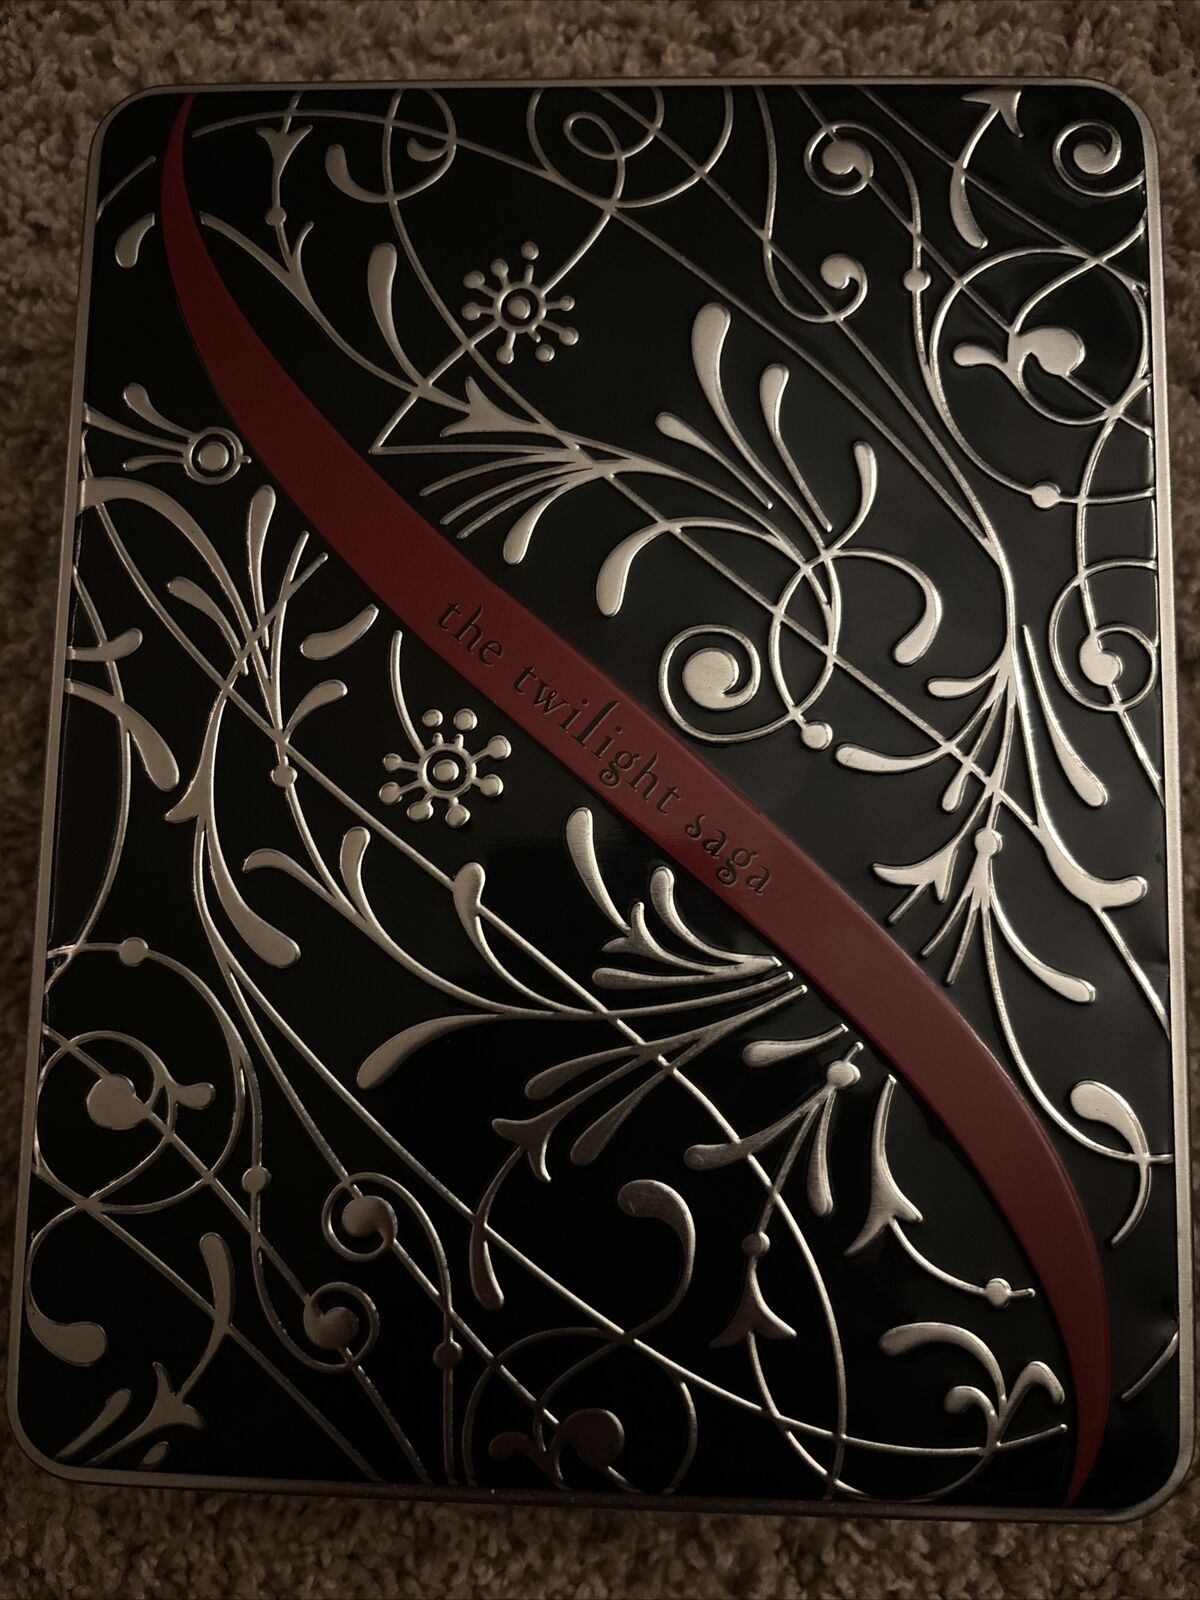 The Twilight Saga Journal Set with Keepsake Tin Box 4 Journals